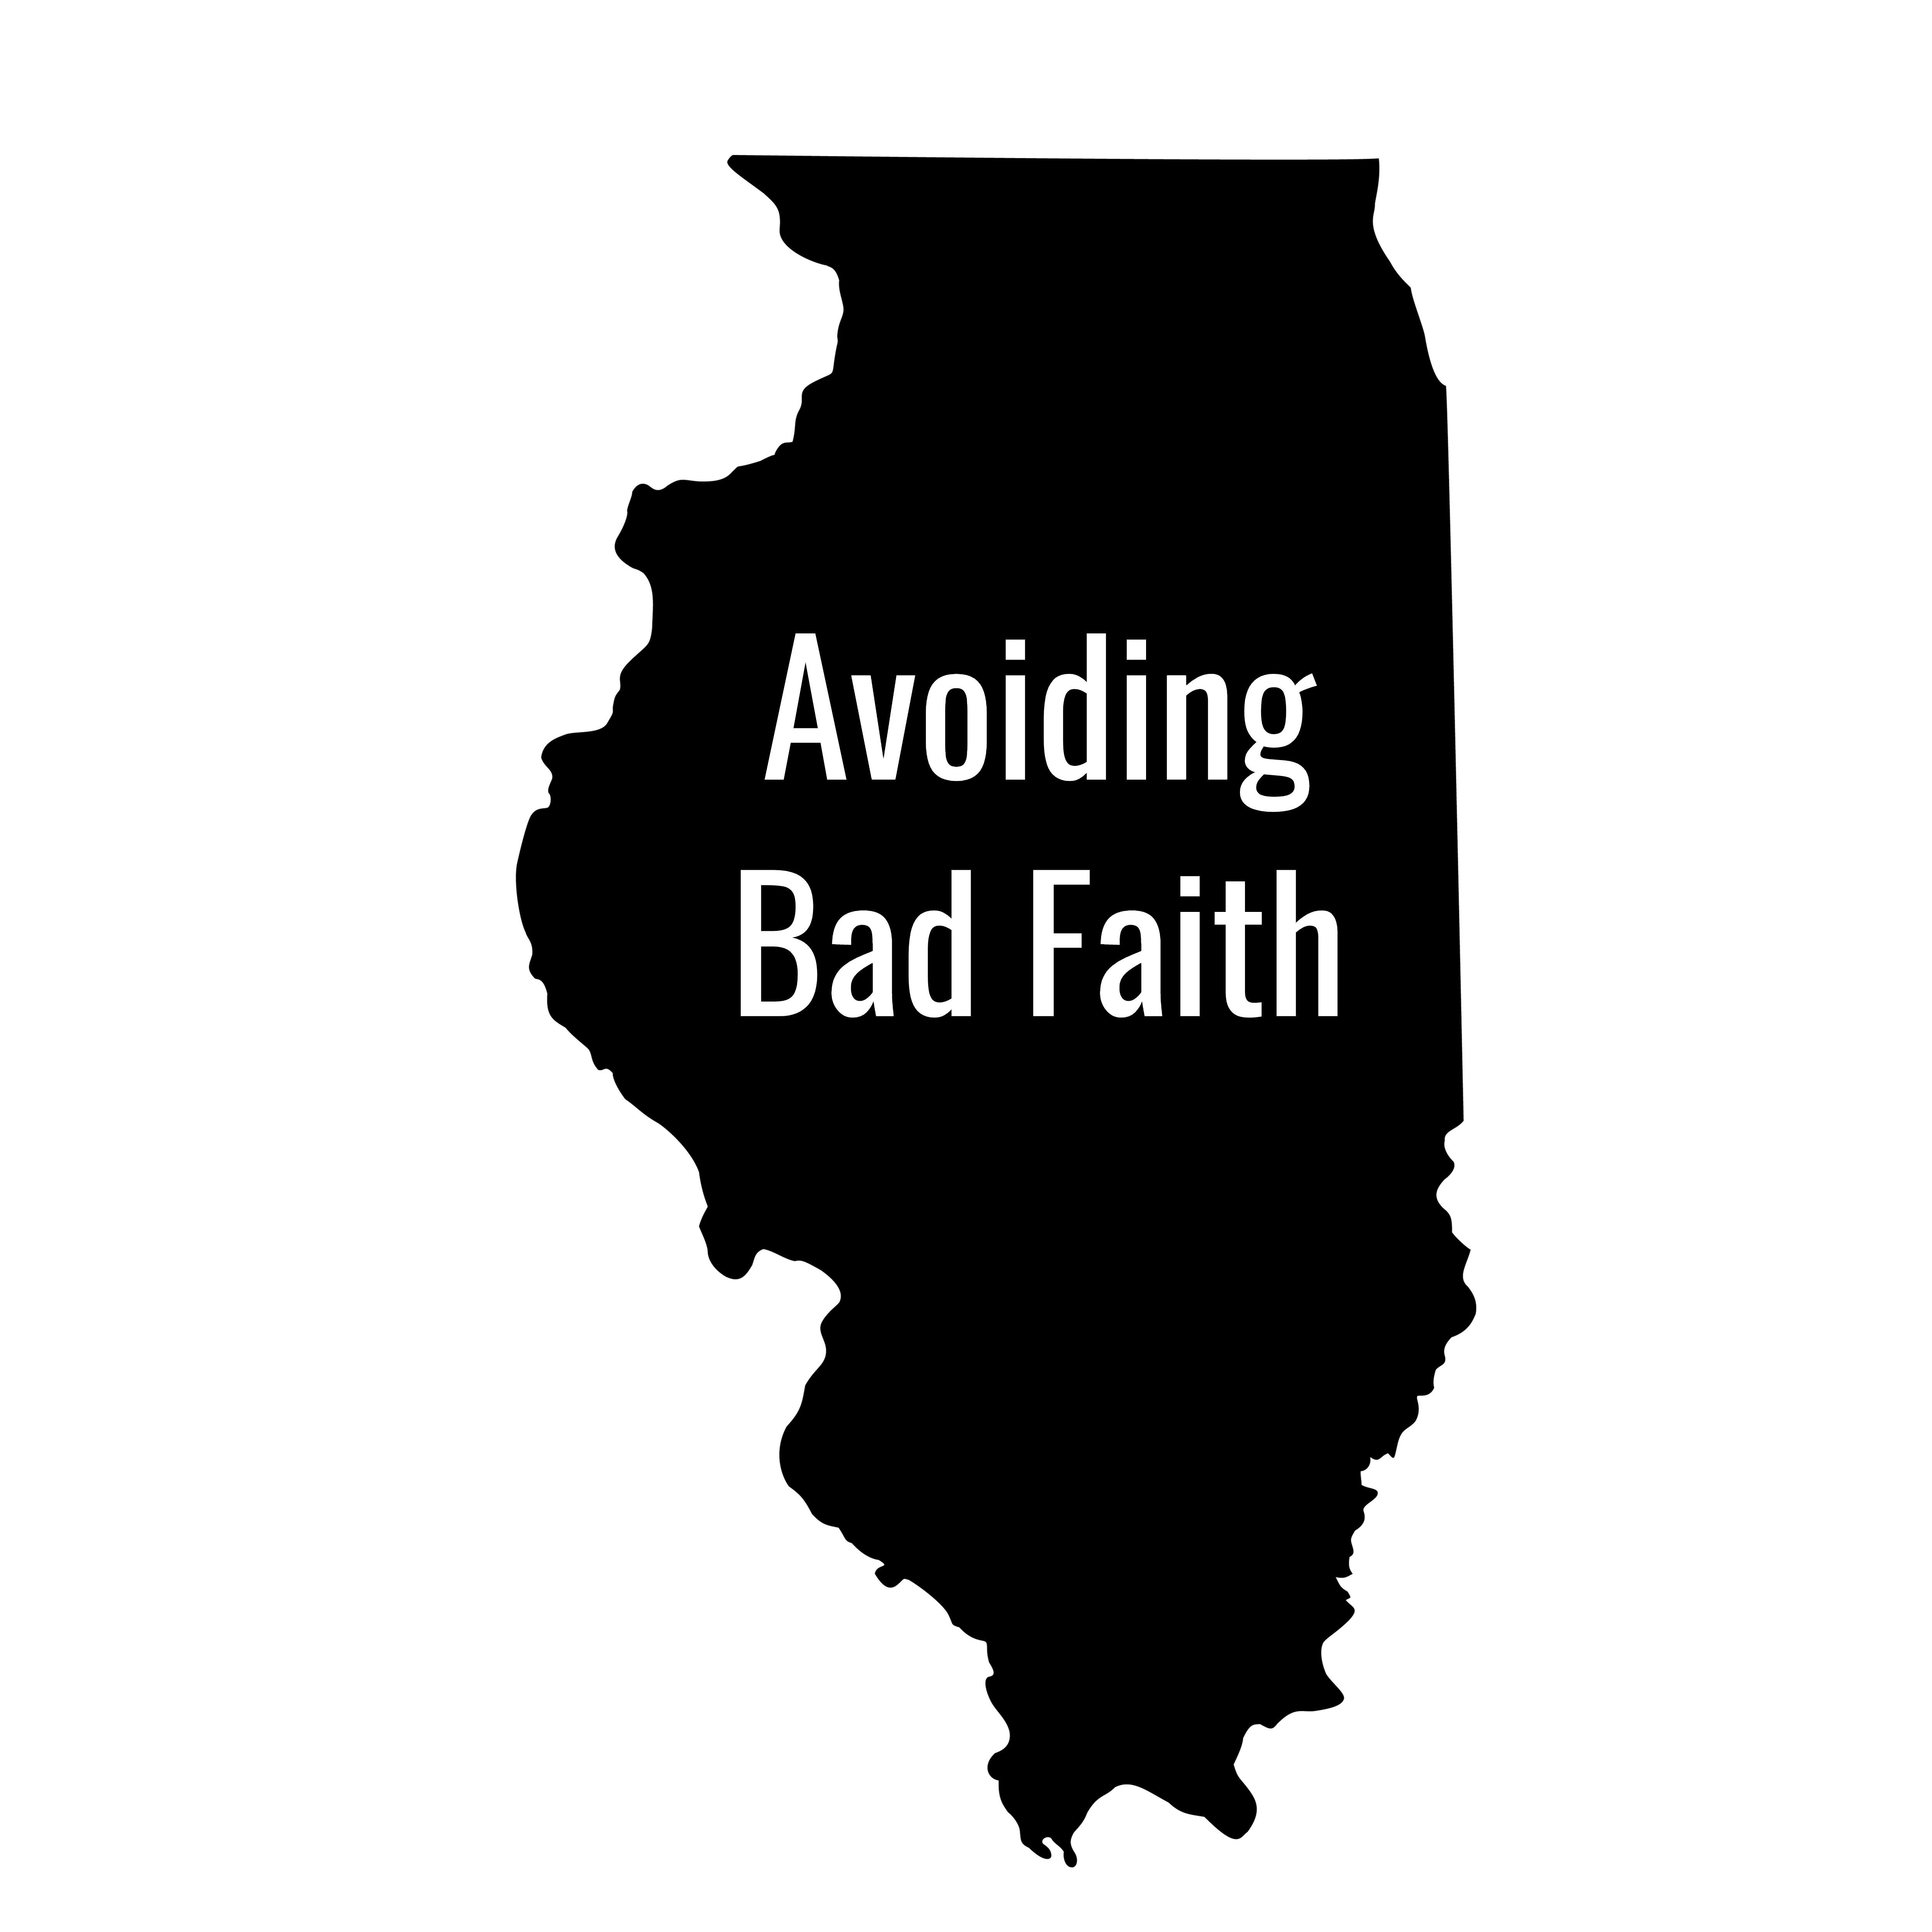 Tips for Avoiding First-Party “Bad Faith” in Illinois